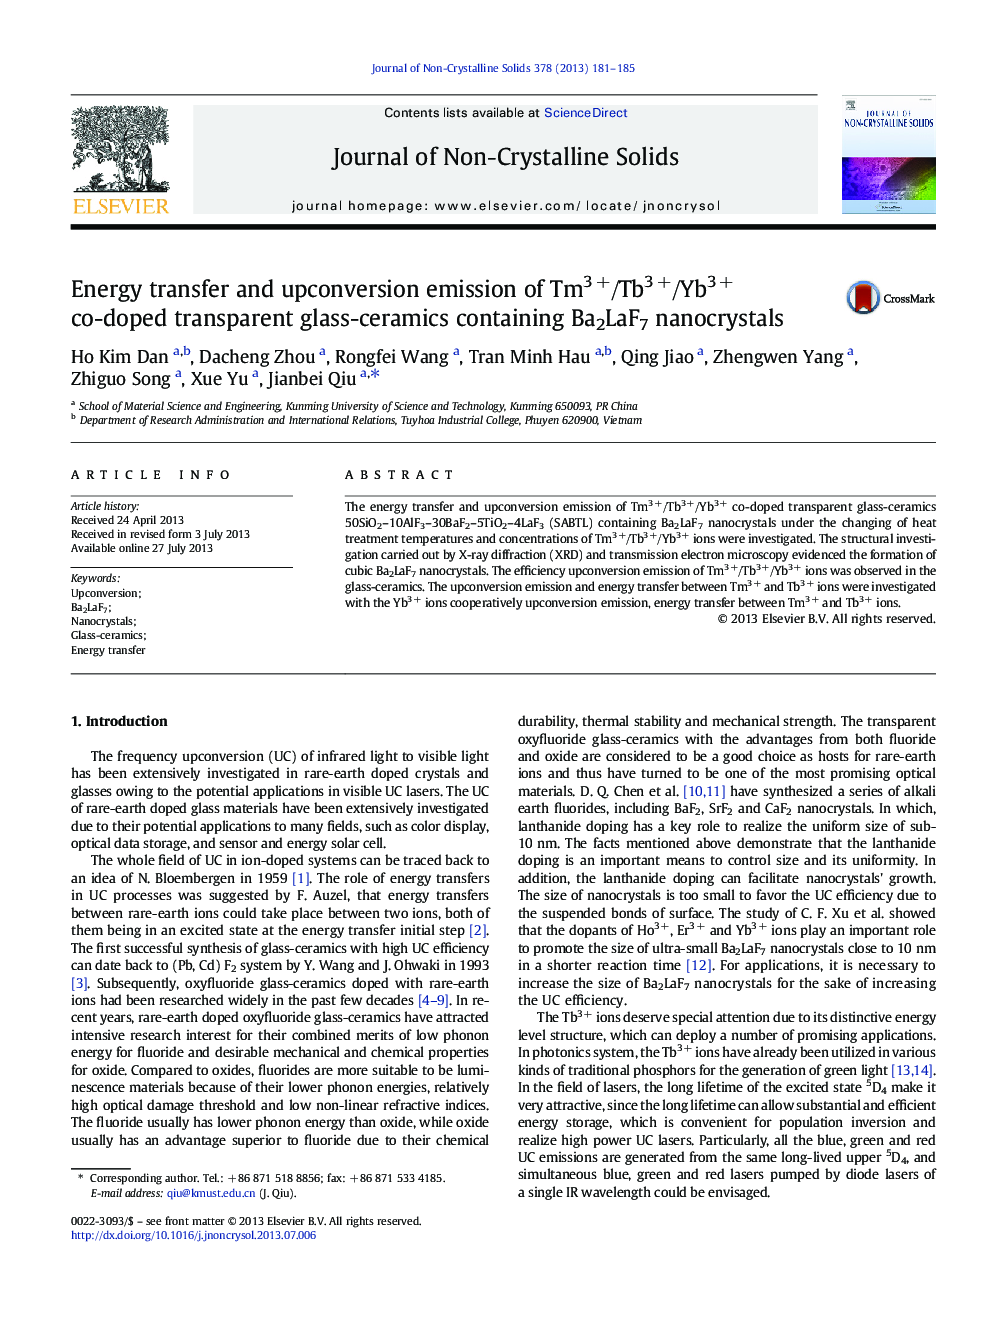 Energy transfer and upconversion emission of Tm3Â +/Tb3Â +/Yb3Â + co-doped transparent glass-ceramics containing Ba2LaF7 nanocrystals